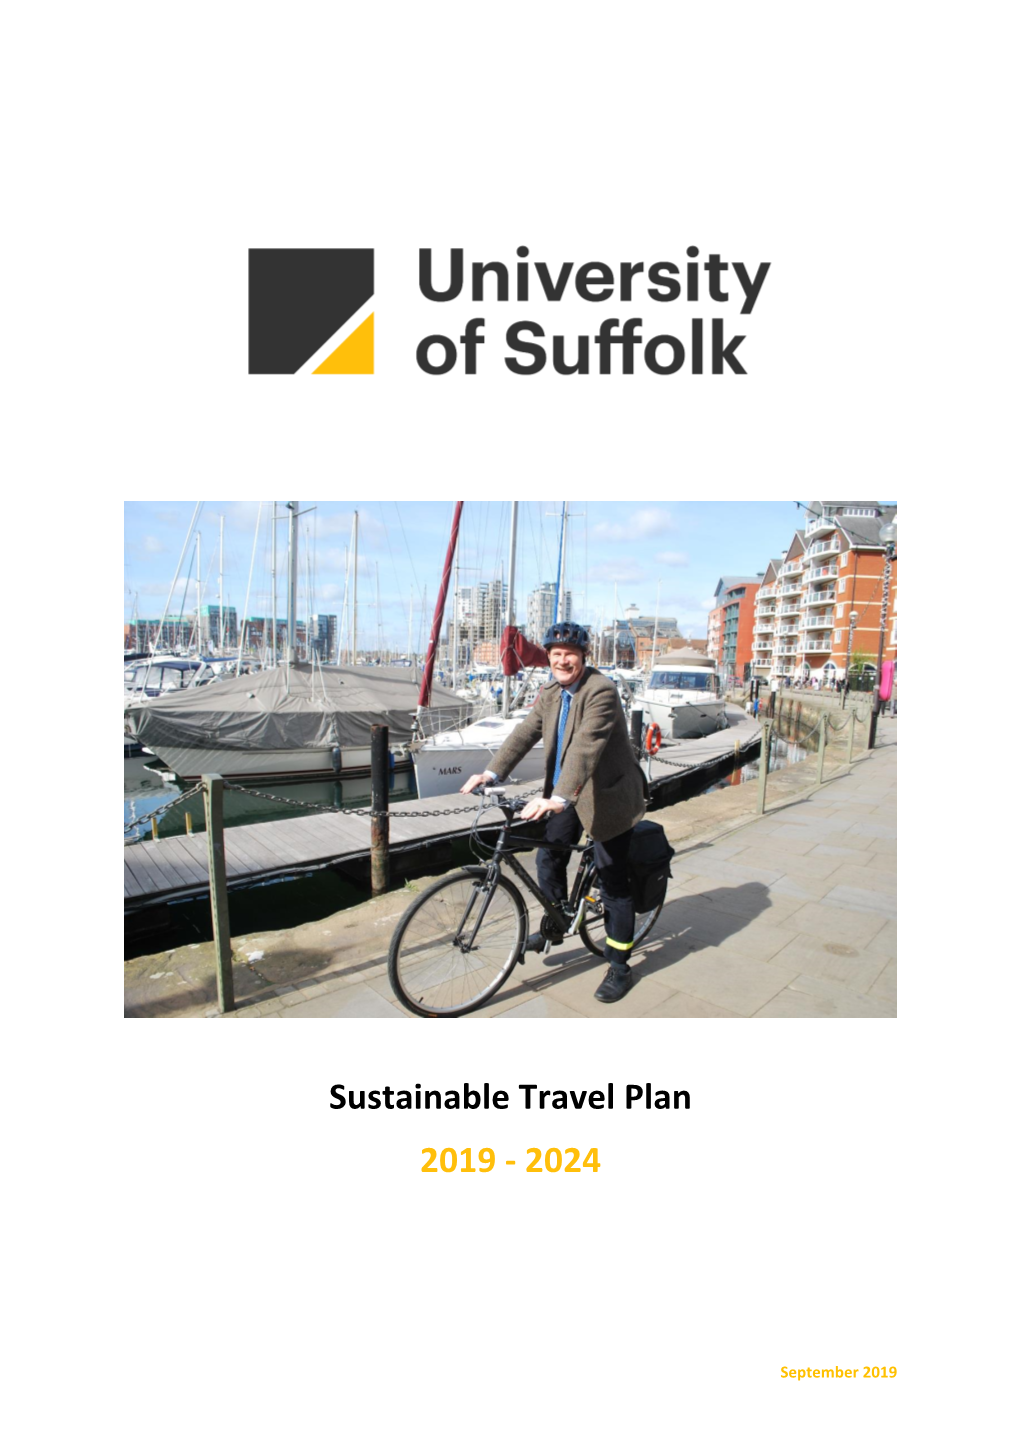 The University of Suffolk Travel Plan